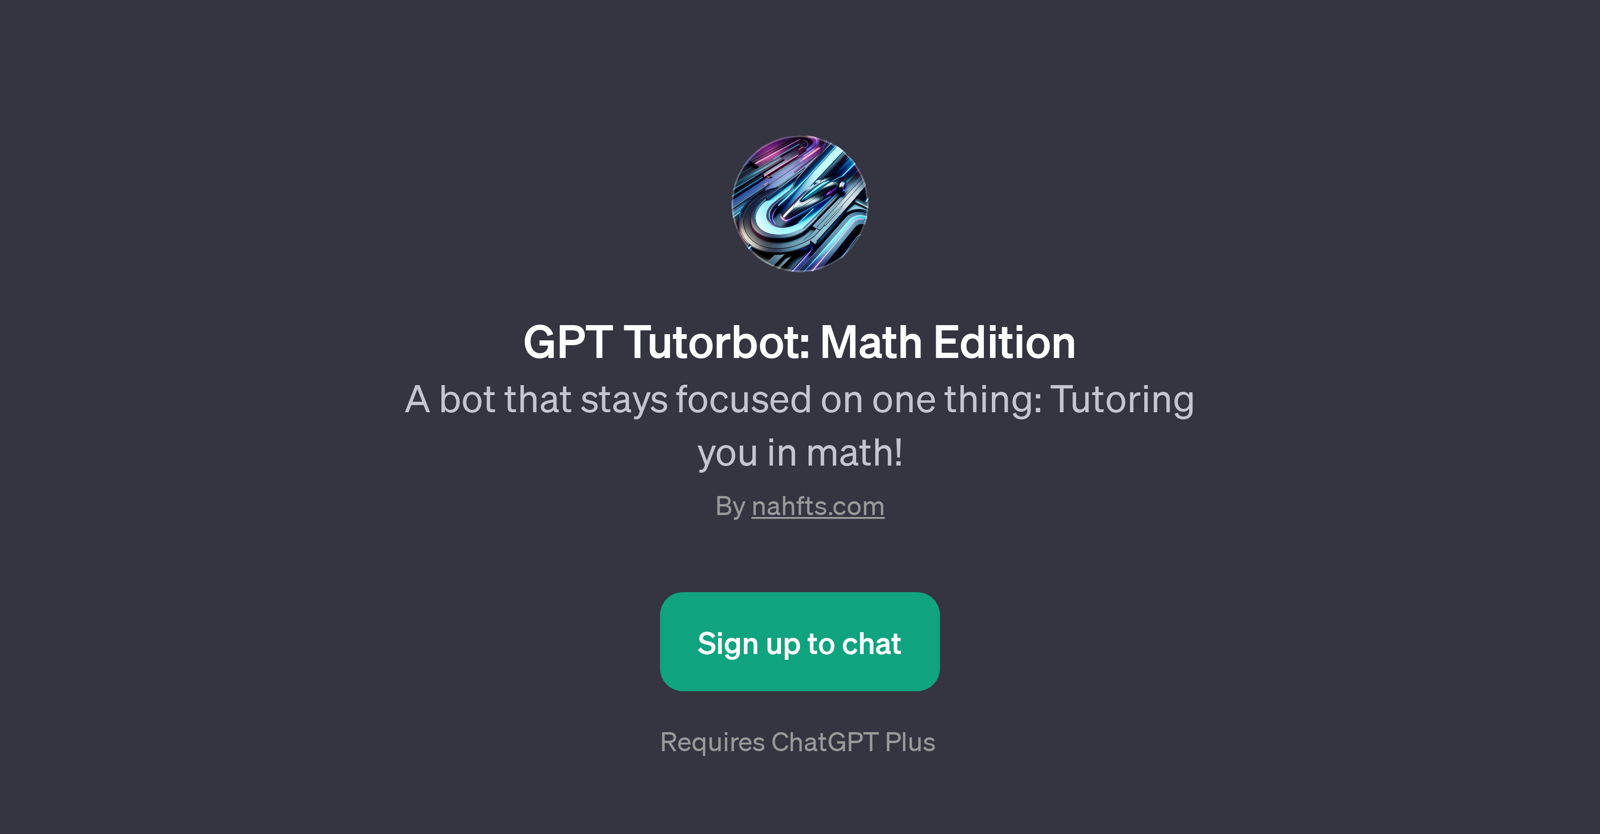 GPT Tutorbot: Math Edition website